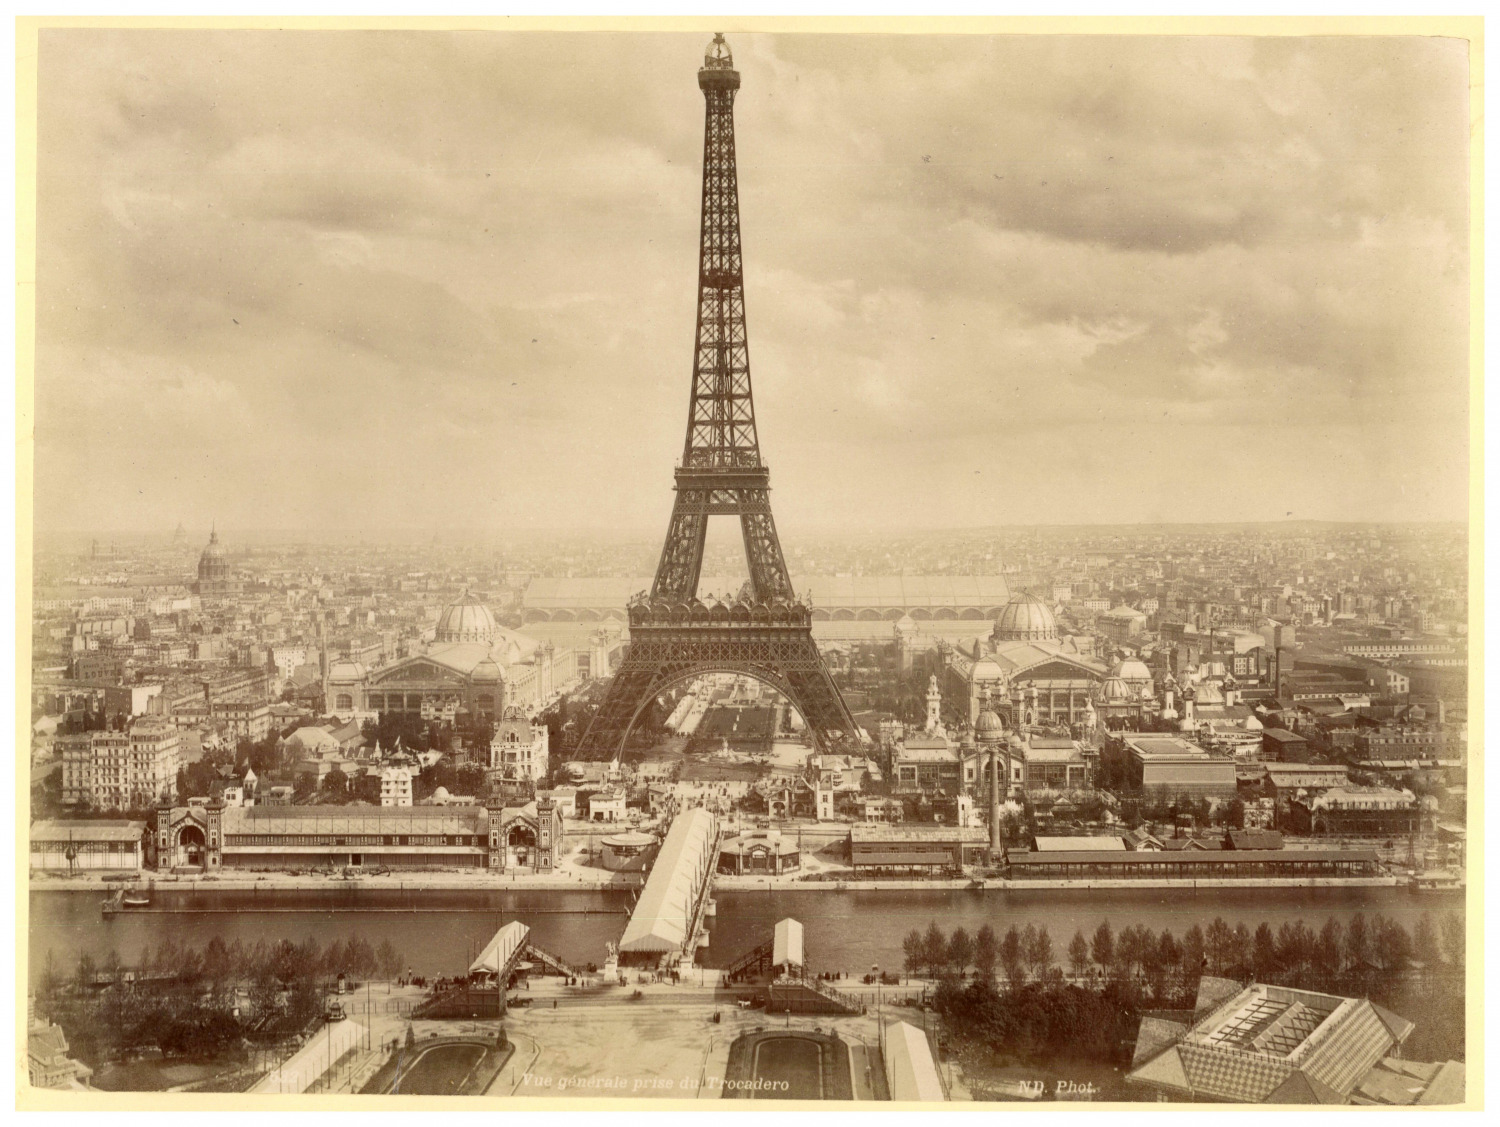 France, Paris, Vintage Eiffel Tower print, period print, albumi print